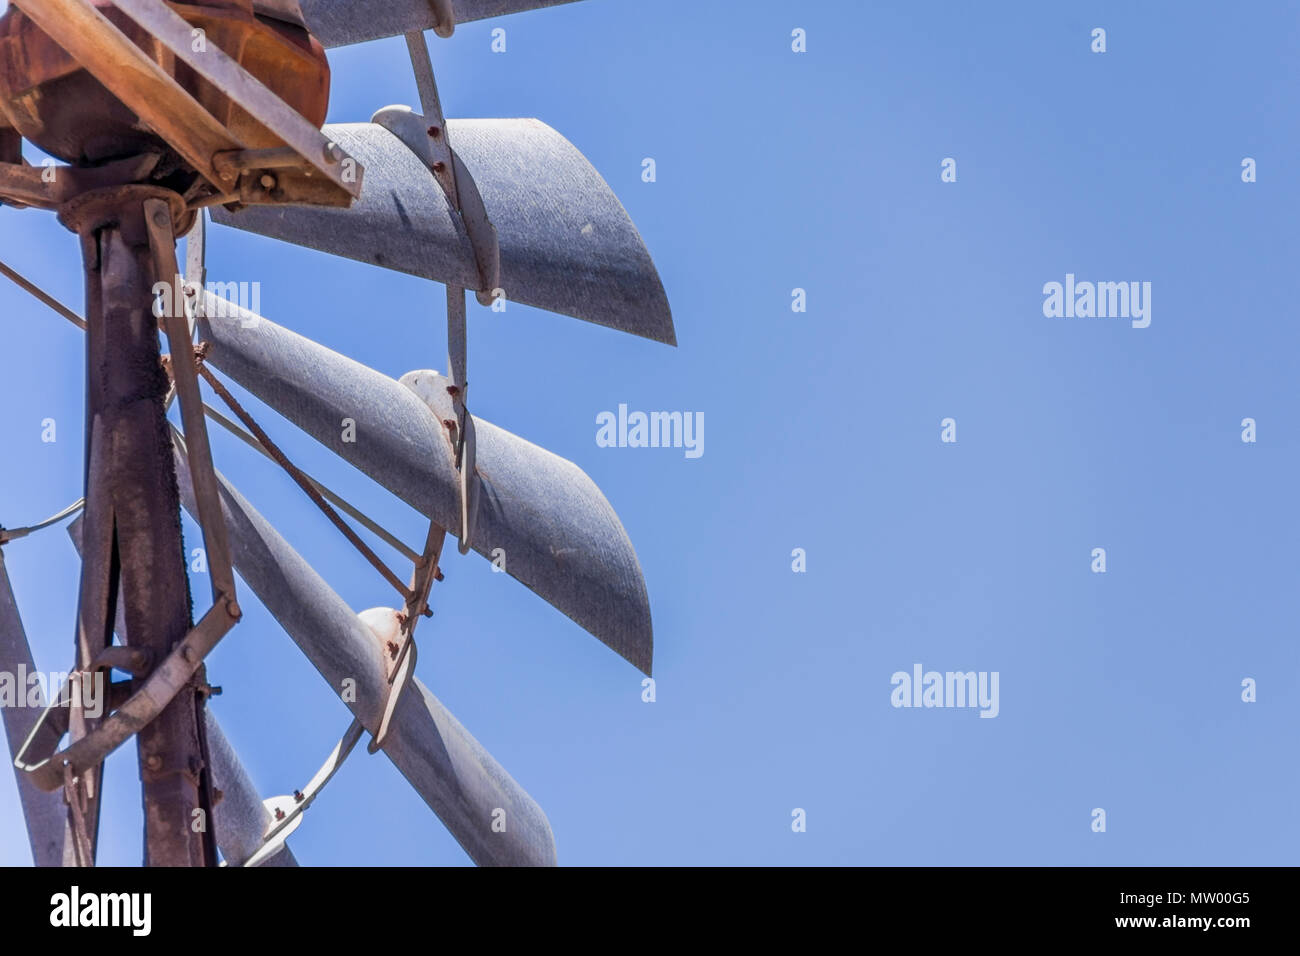 Close-up of an Old metallic wind turbine Stock Photo